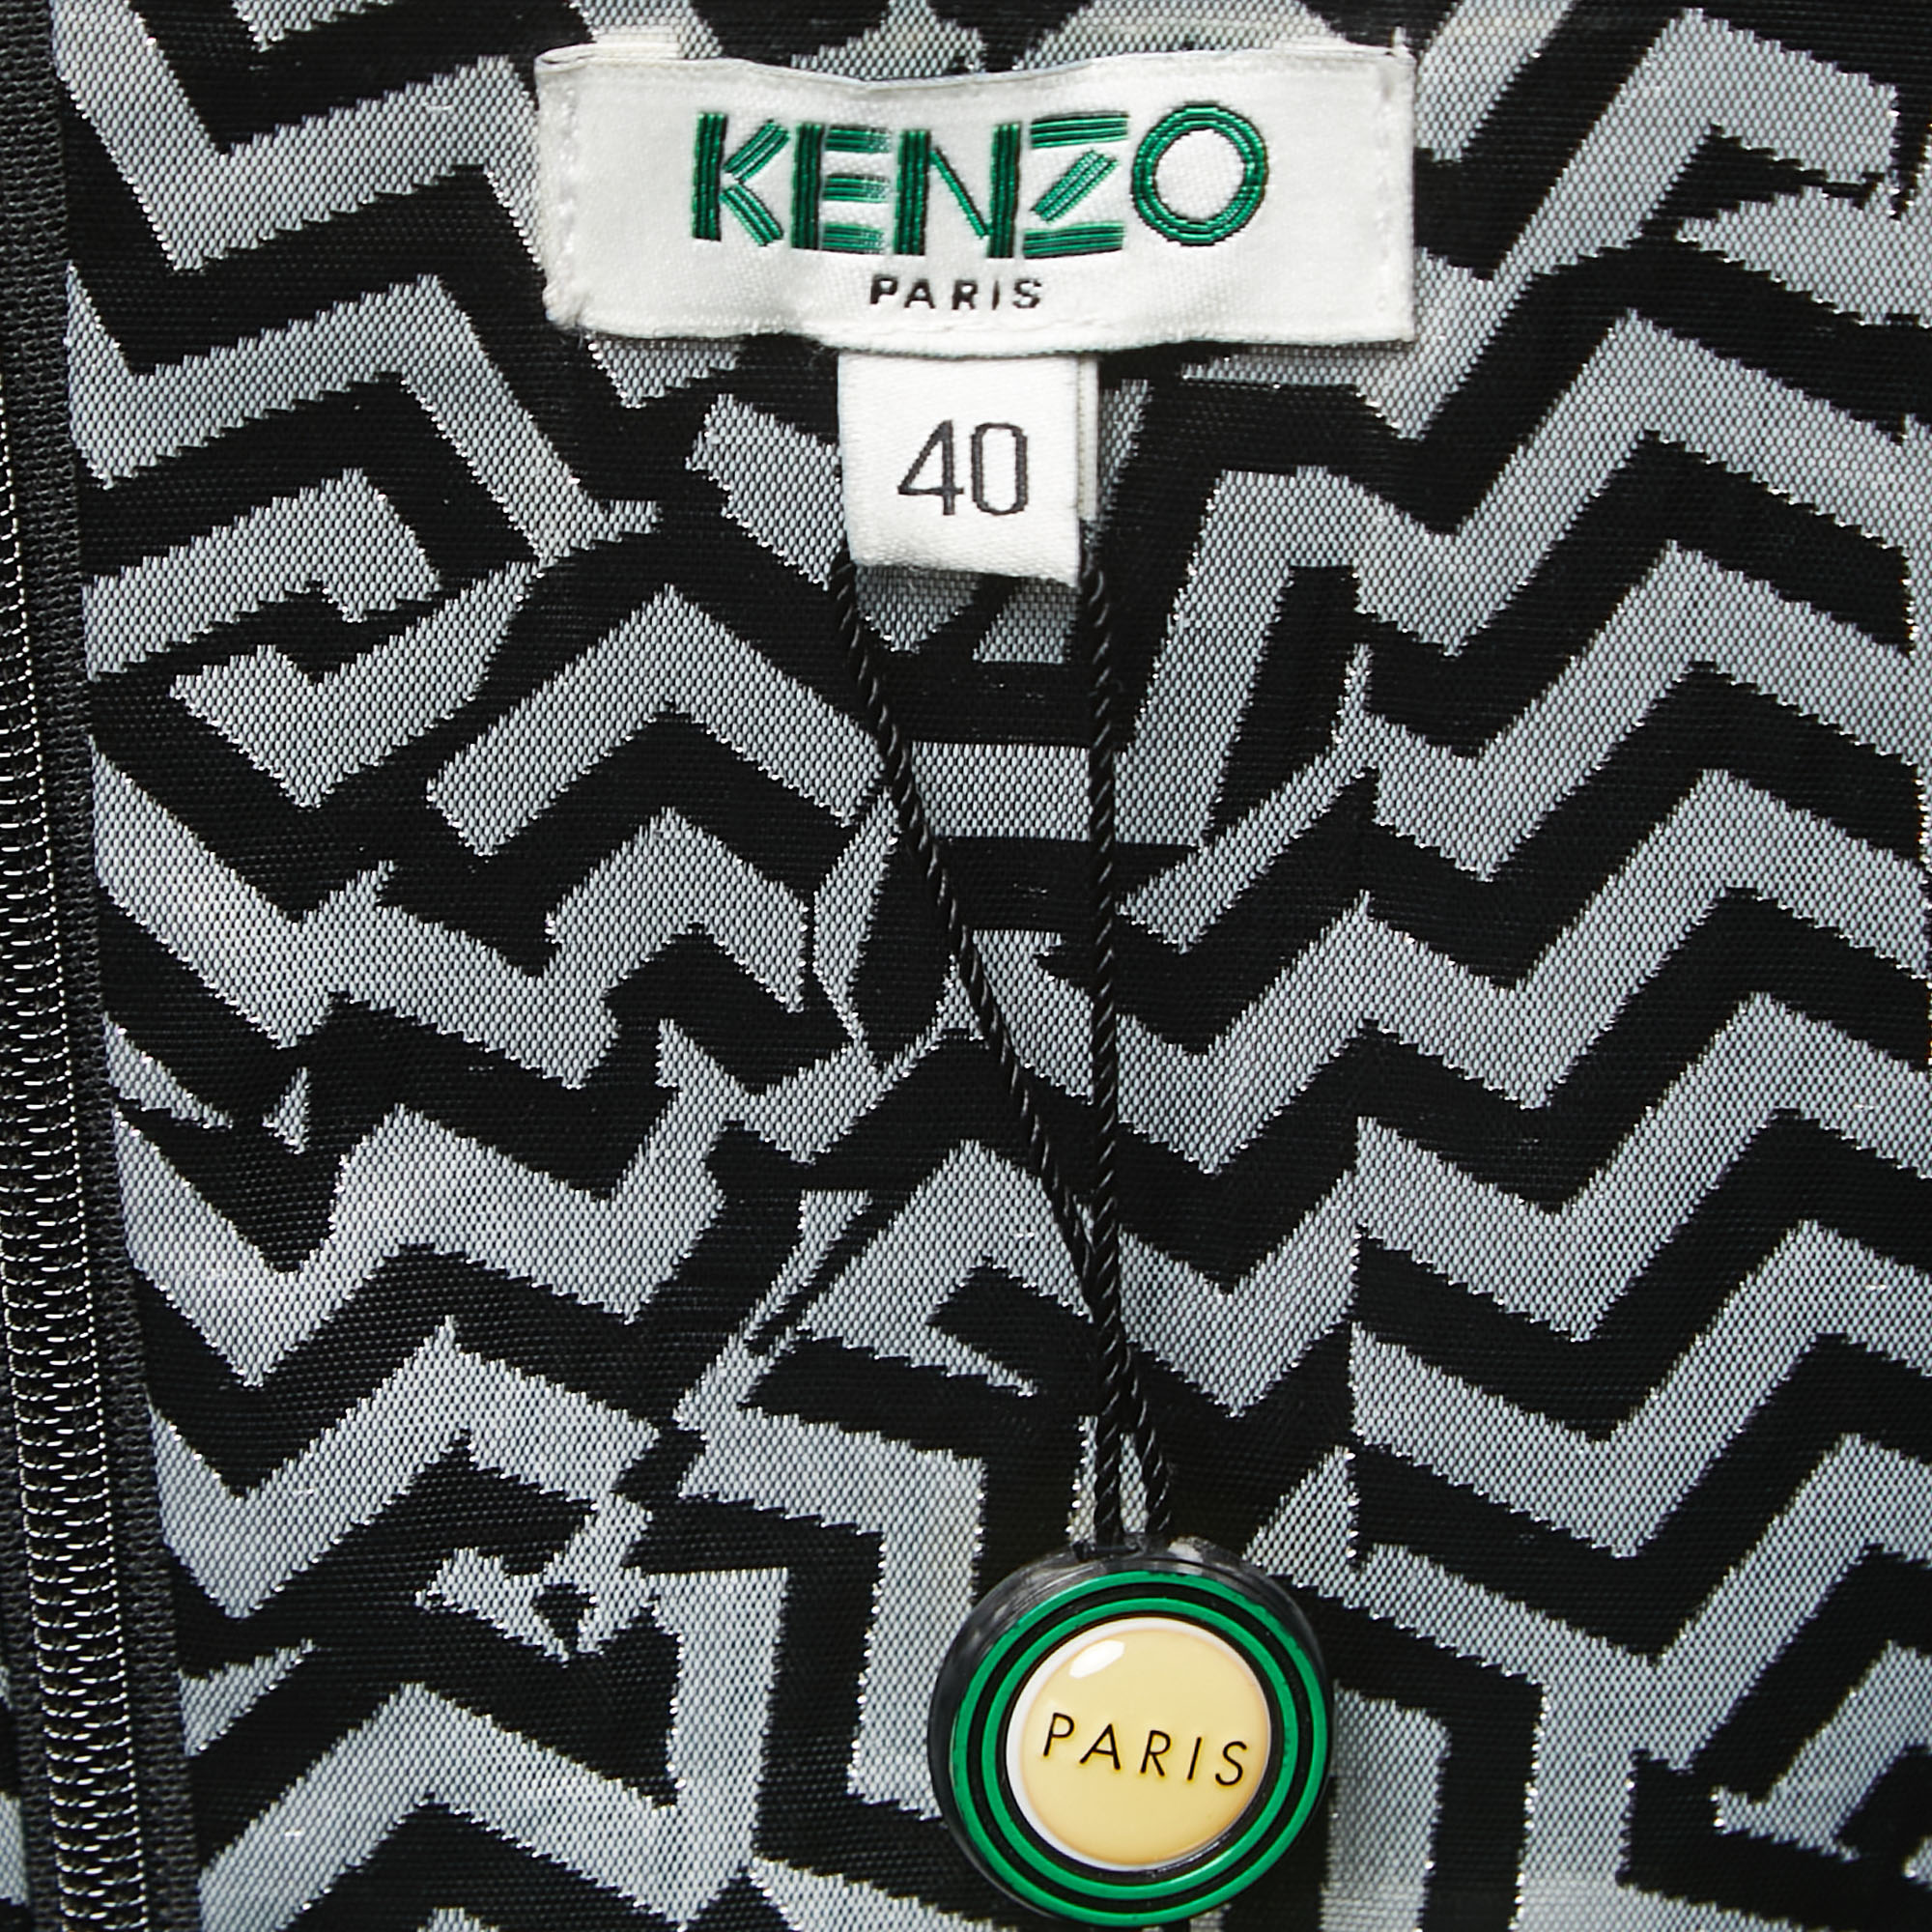 Kenzo Black/White Chevron Patterned Jacquard Strapless Dress M